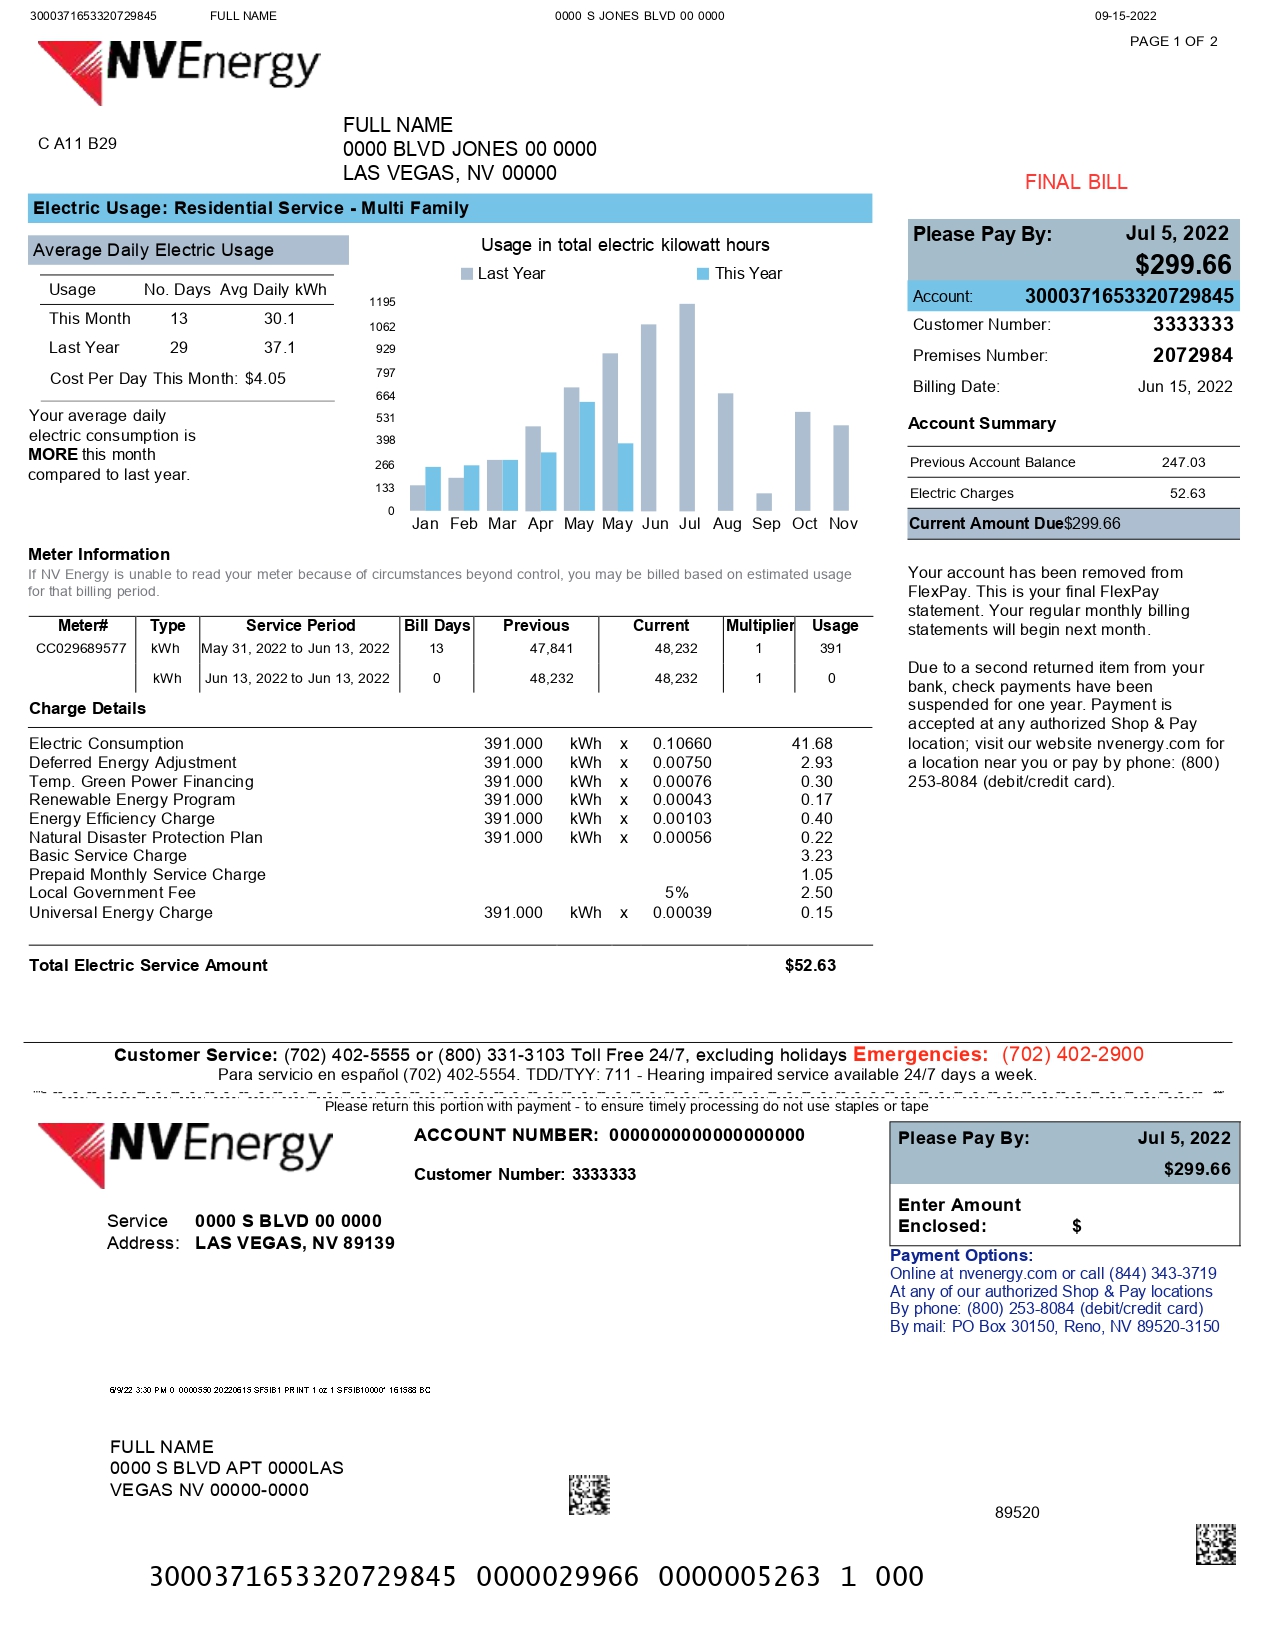 Nevada energy NVEnergy Bill Template MbcVirtual